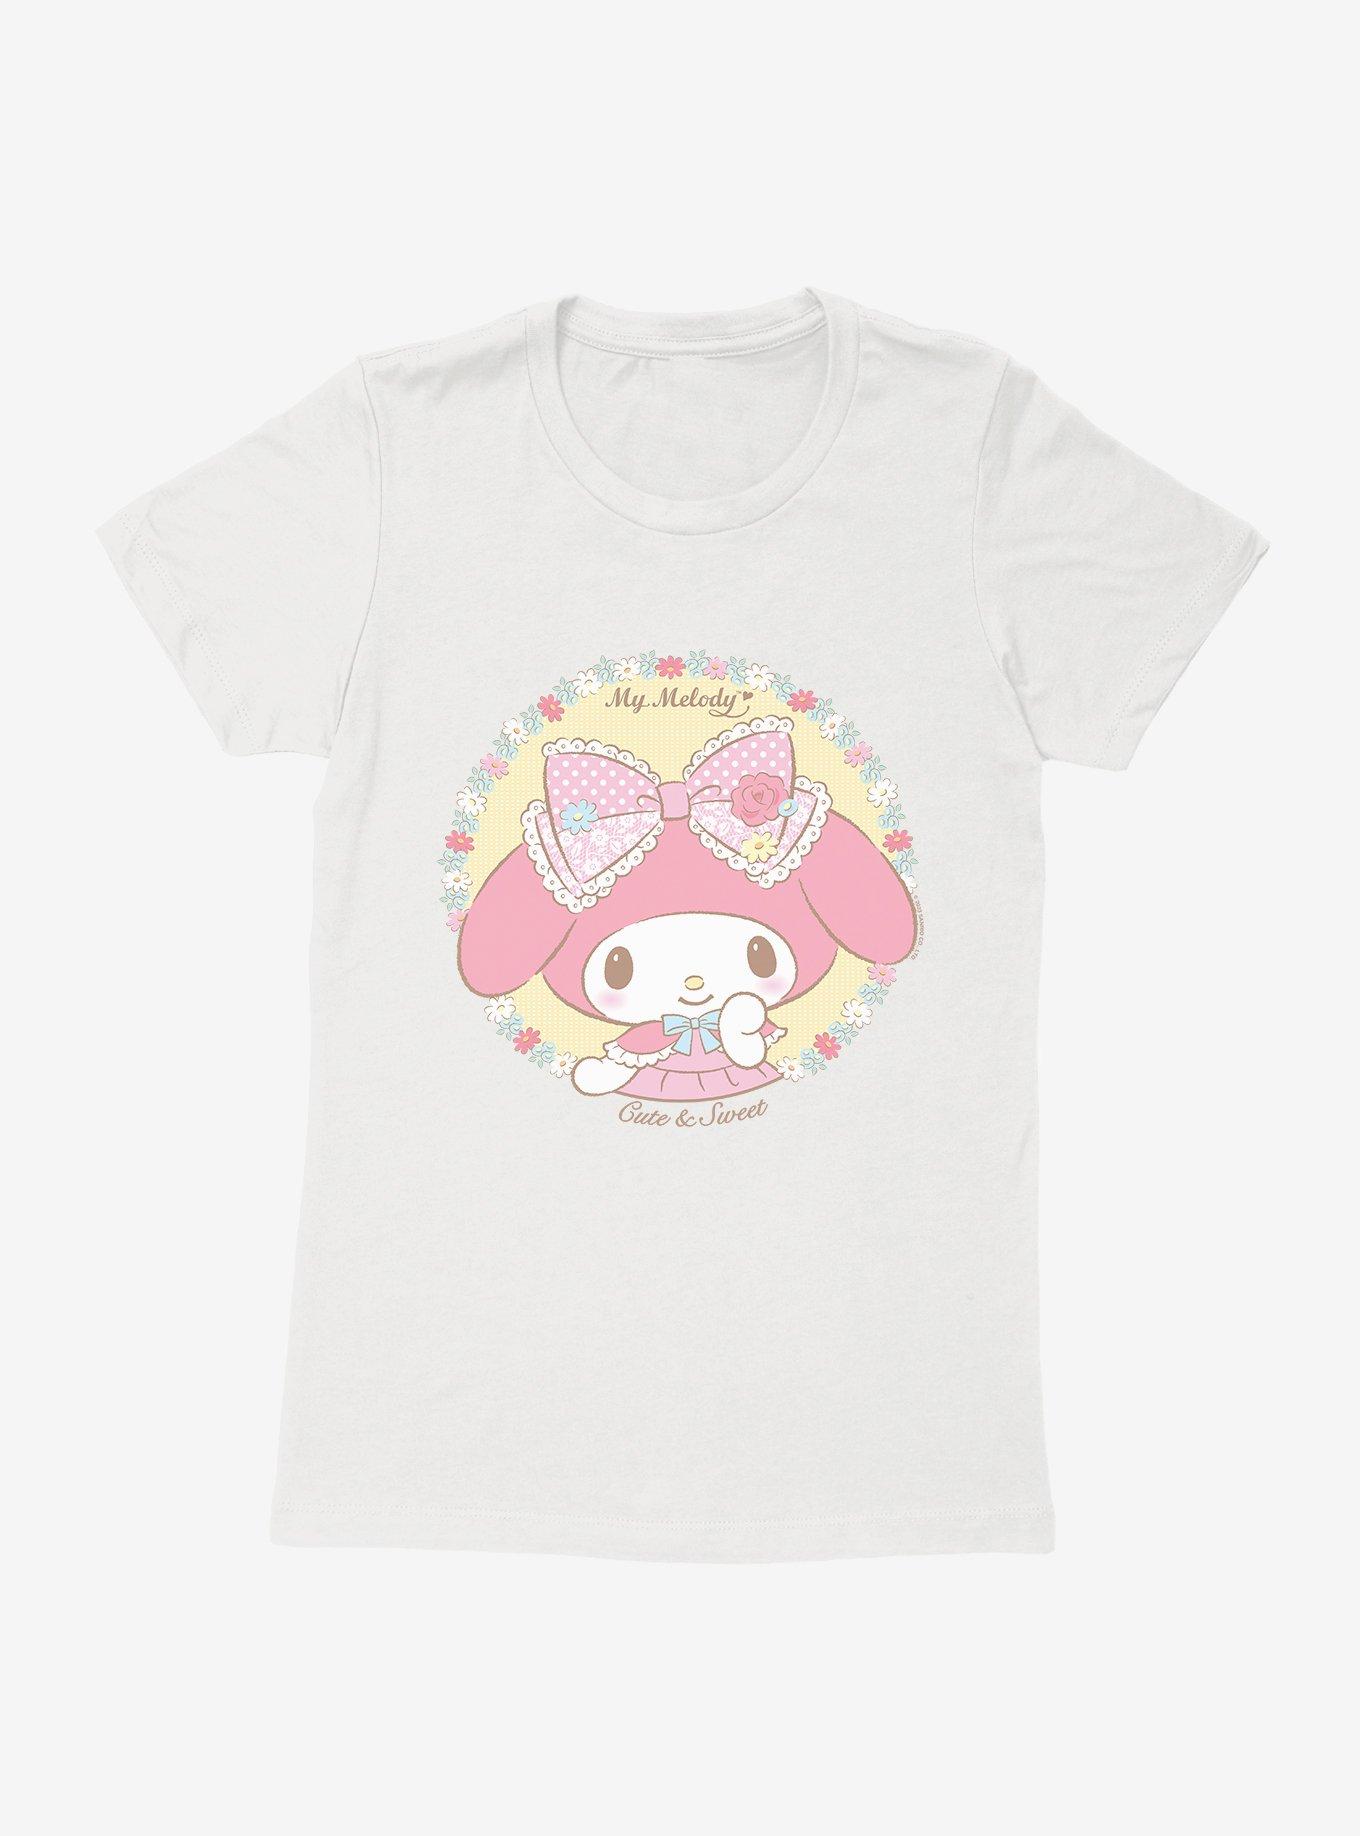 My Melody Cute & Sweet Womens T-Shirt, WHITE, hi-res